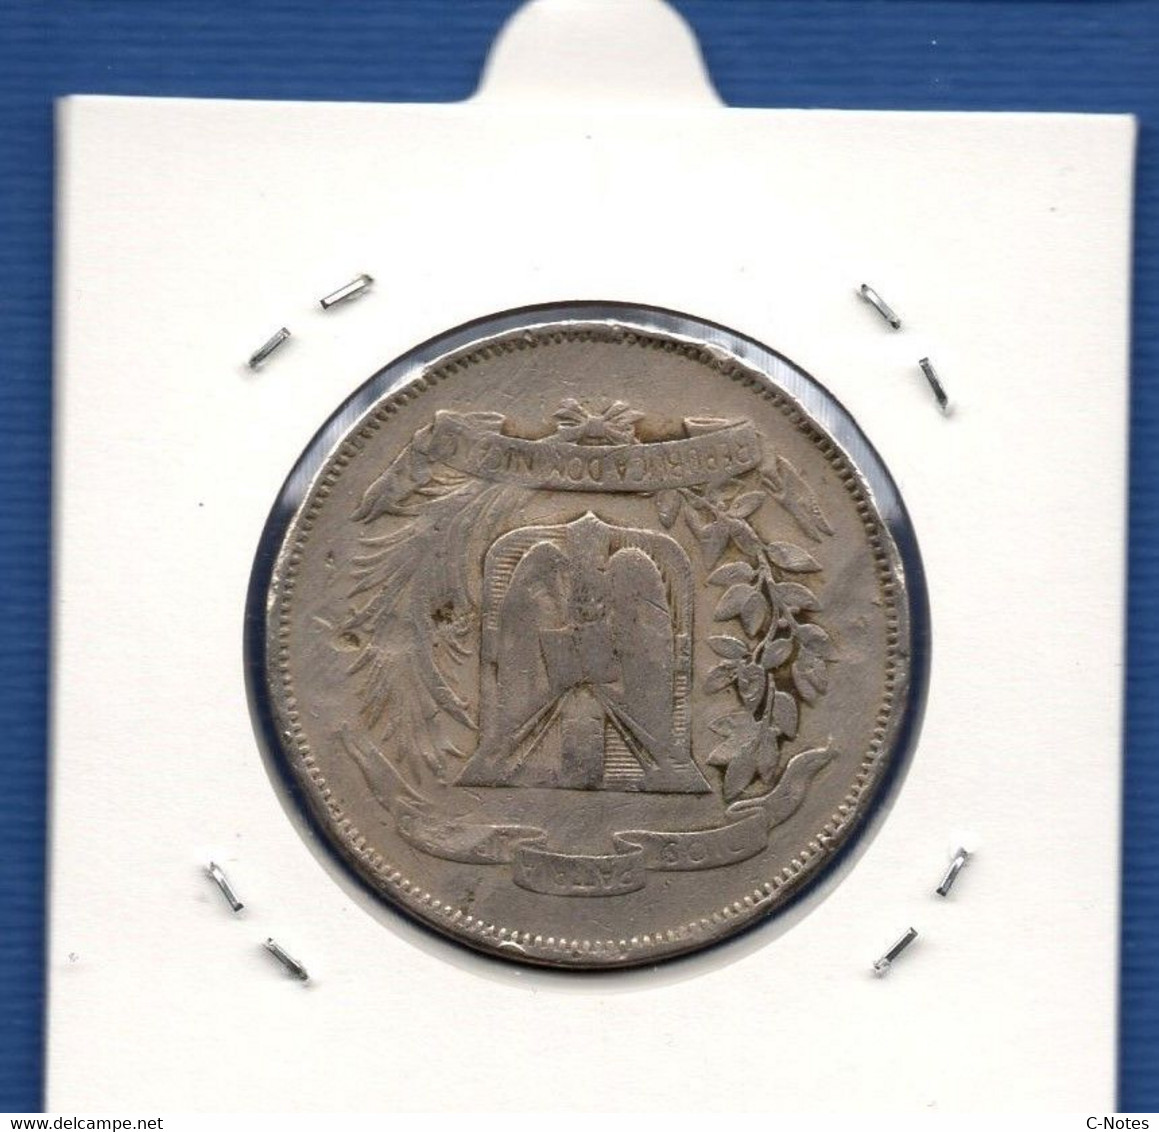 DOMINICAN REPUBLIC - 1/2 Peso 1968 -  See Photos -  Km 21a.1 - Dominicana